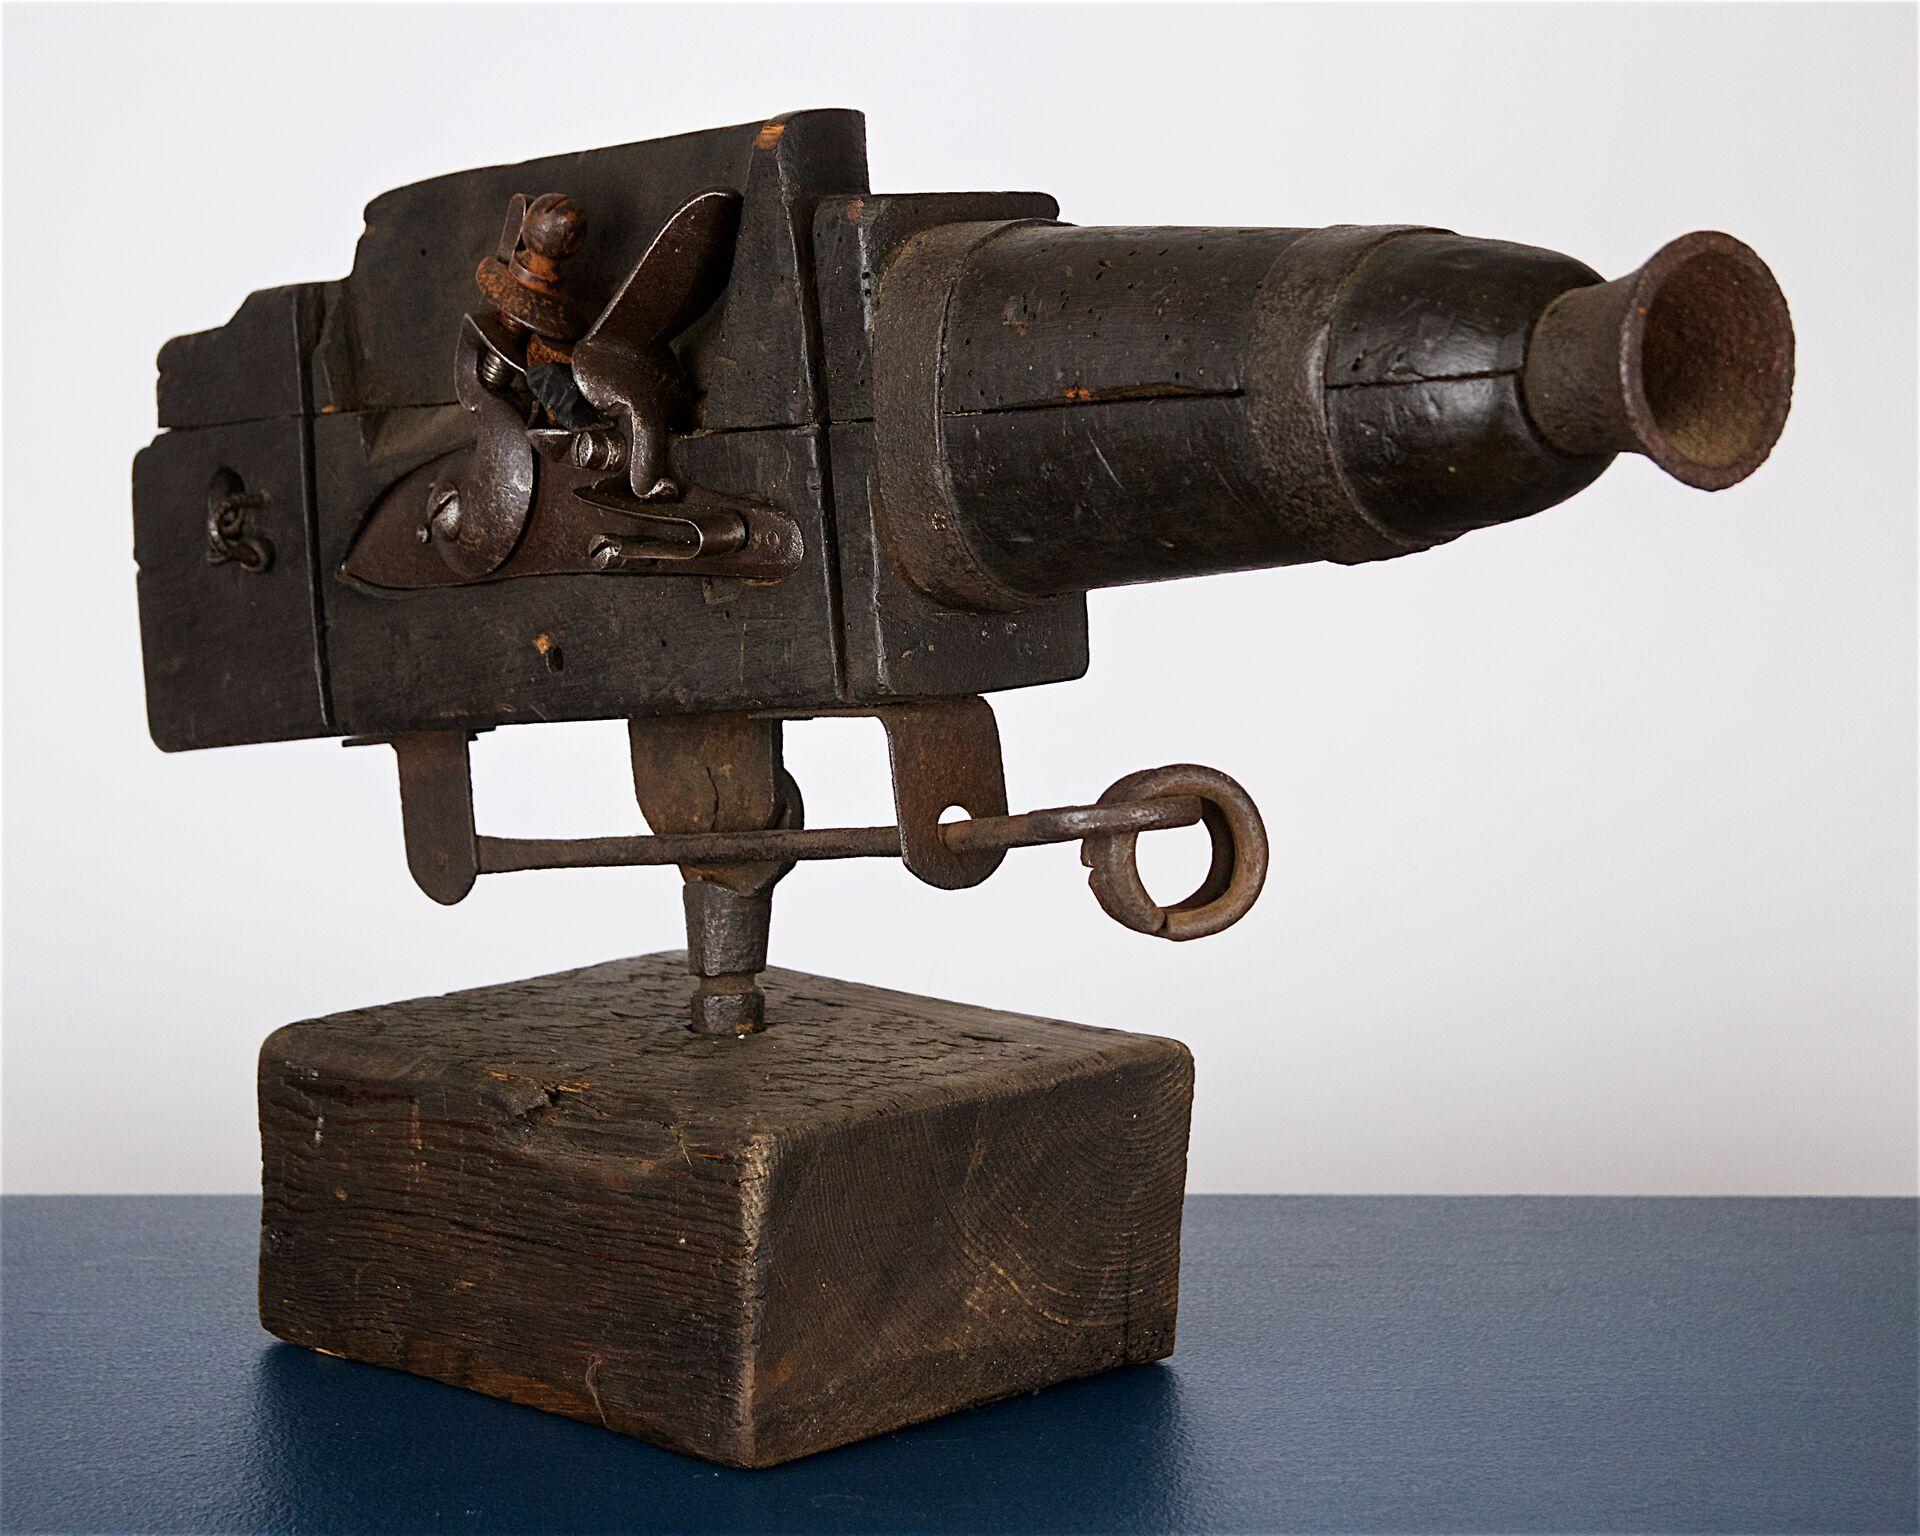 English Flintlock Alarm Gun with Flared Barrel, circa 1800